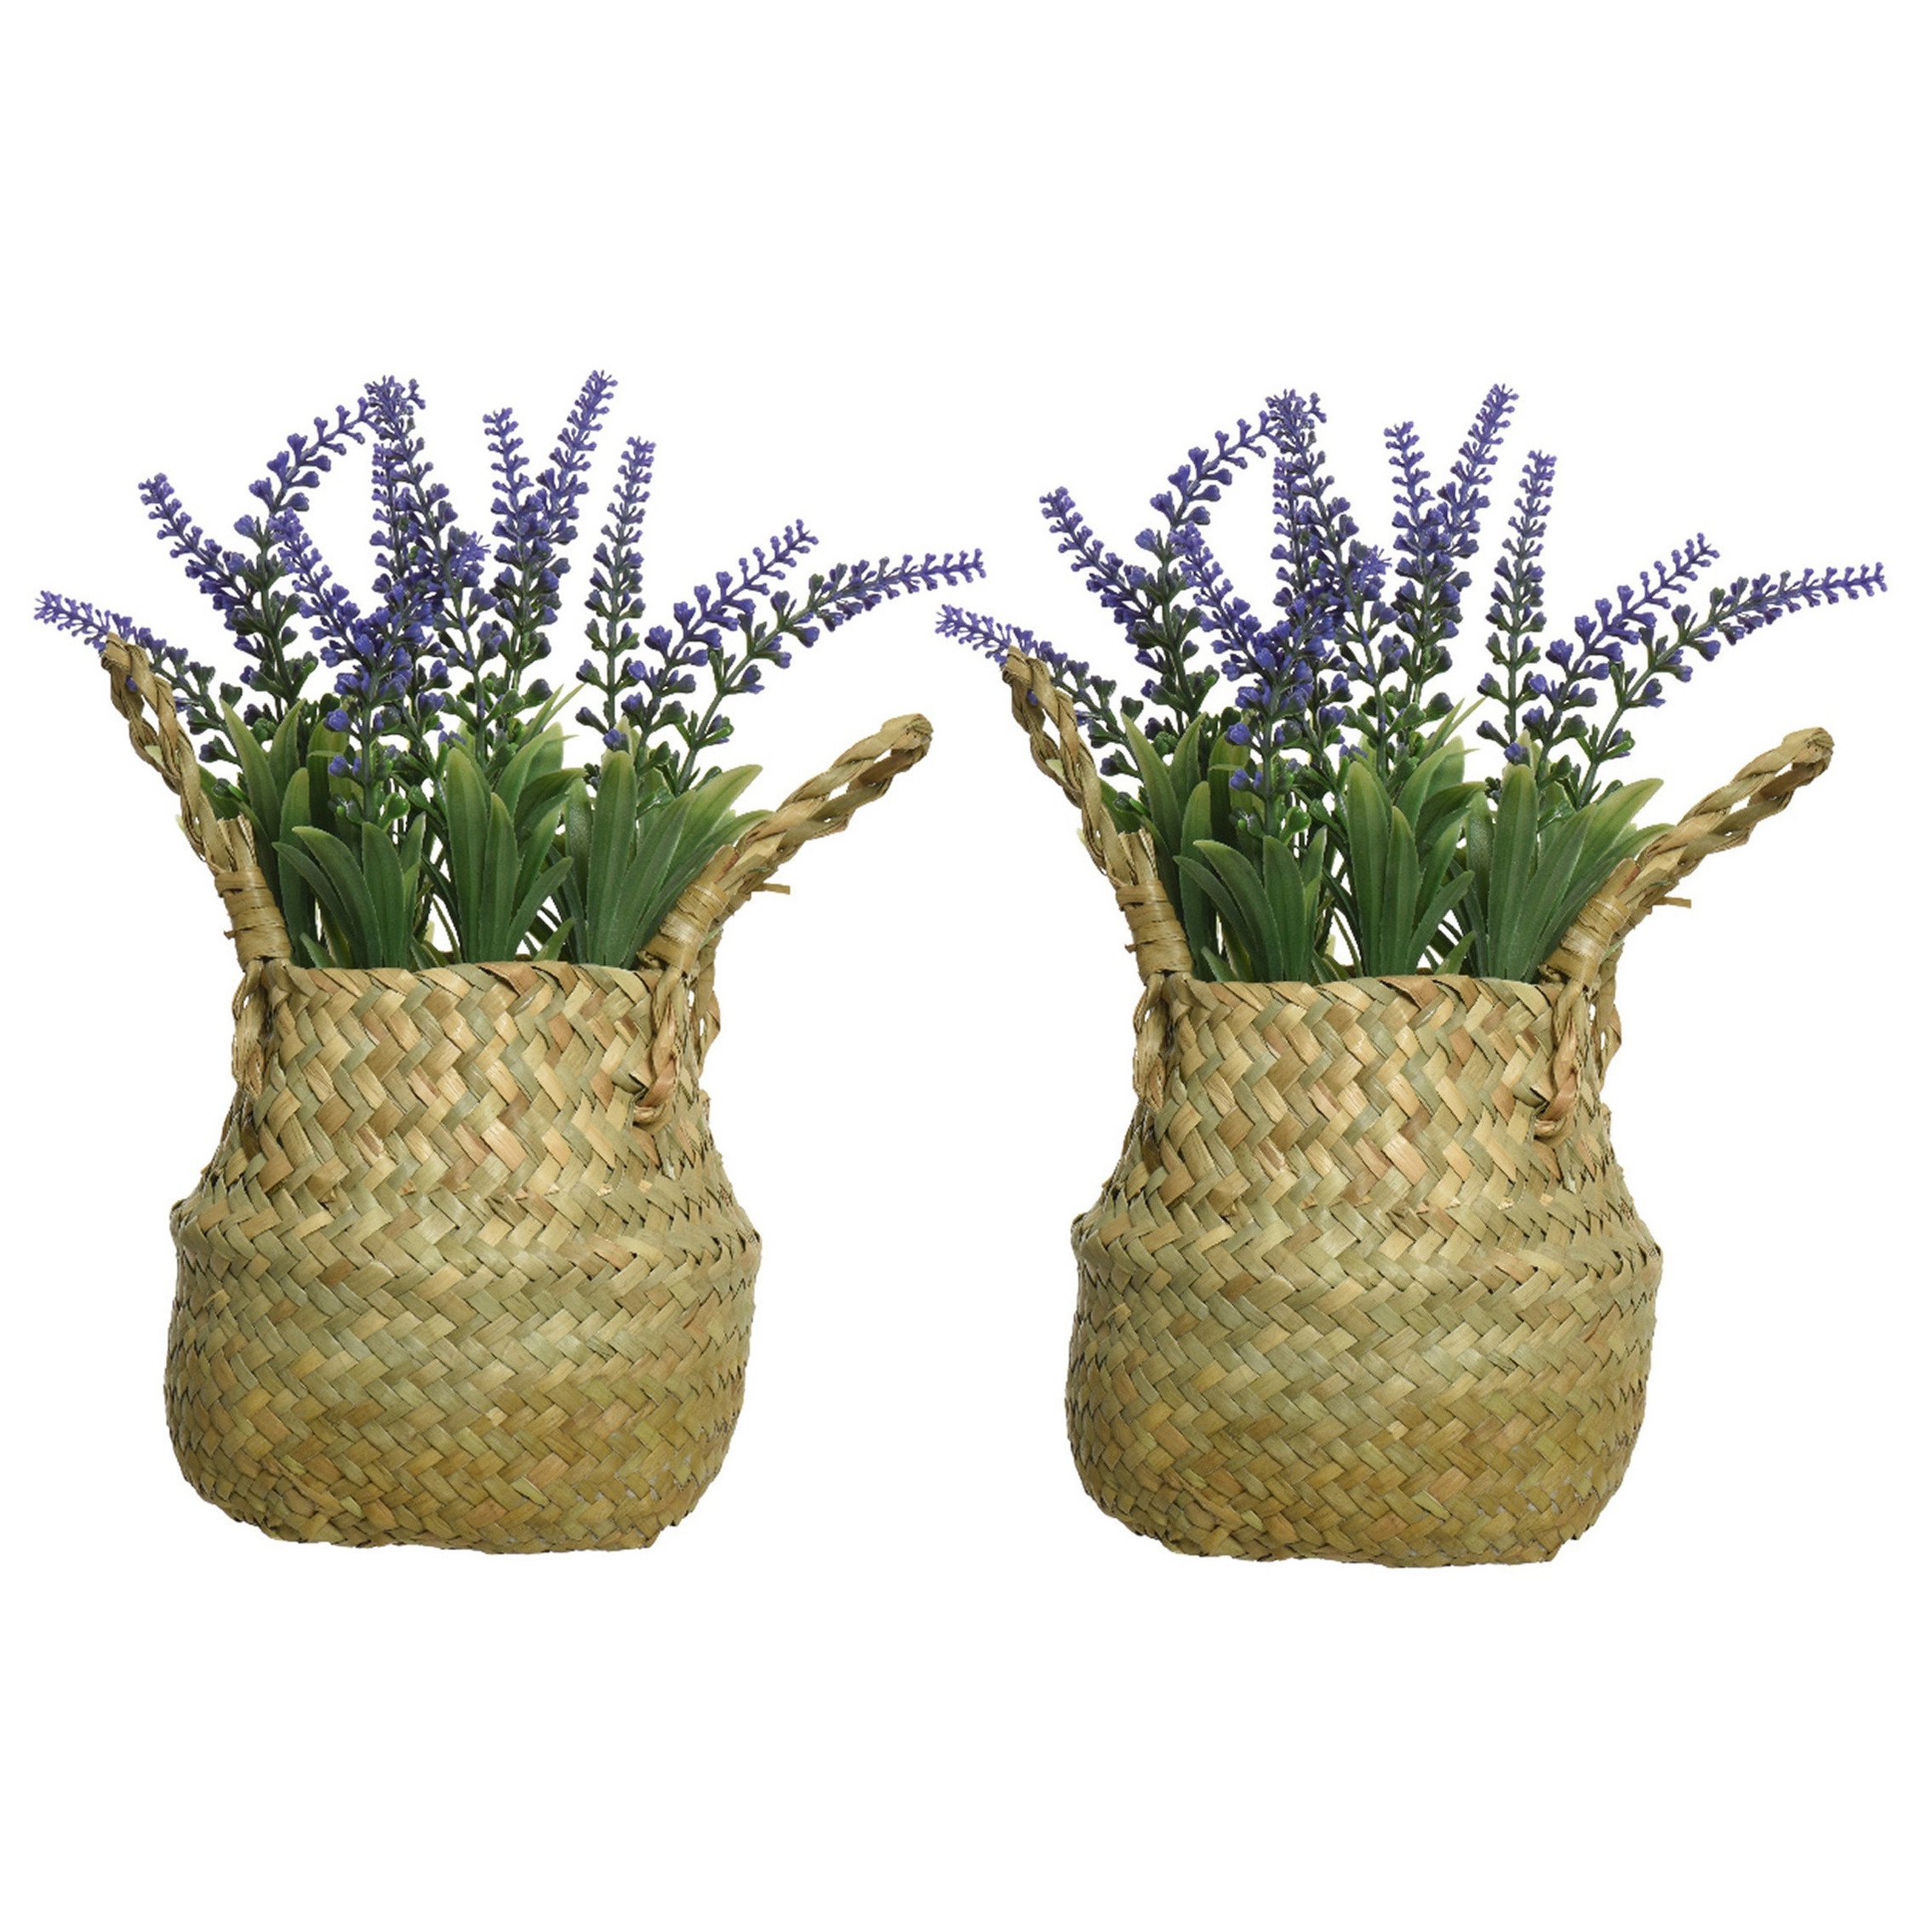 Lavendel kunstplant in rieten mand 2x lila paars D16 x H27 cm